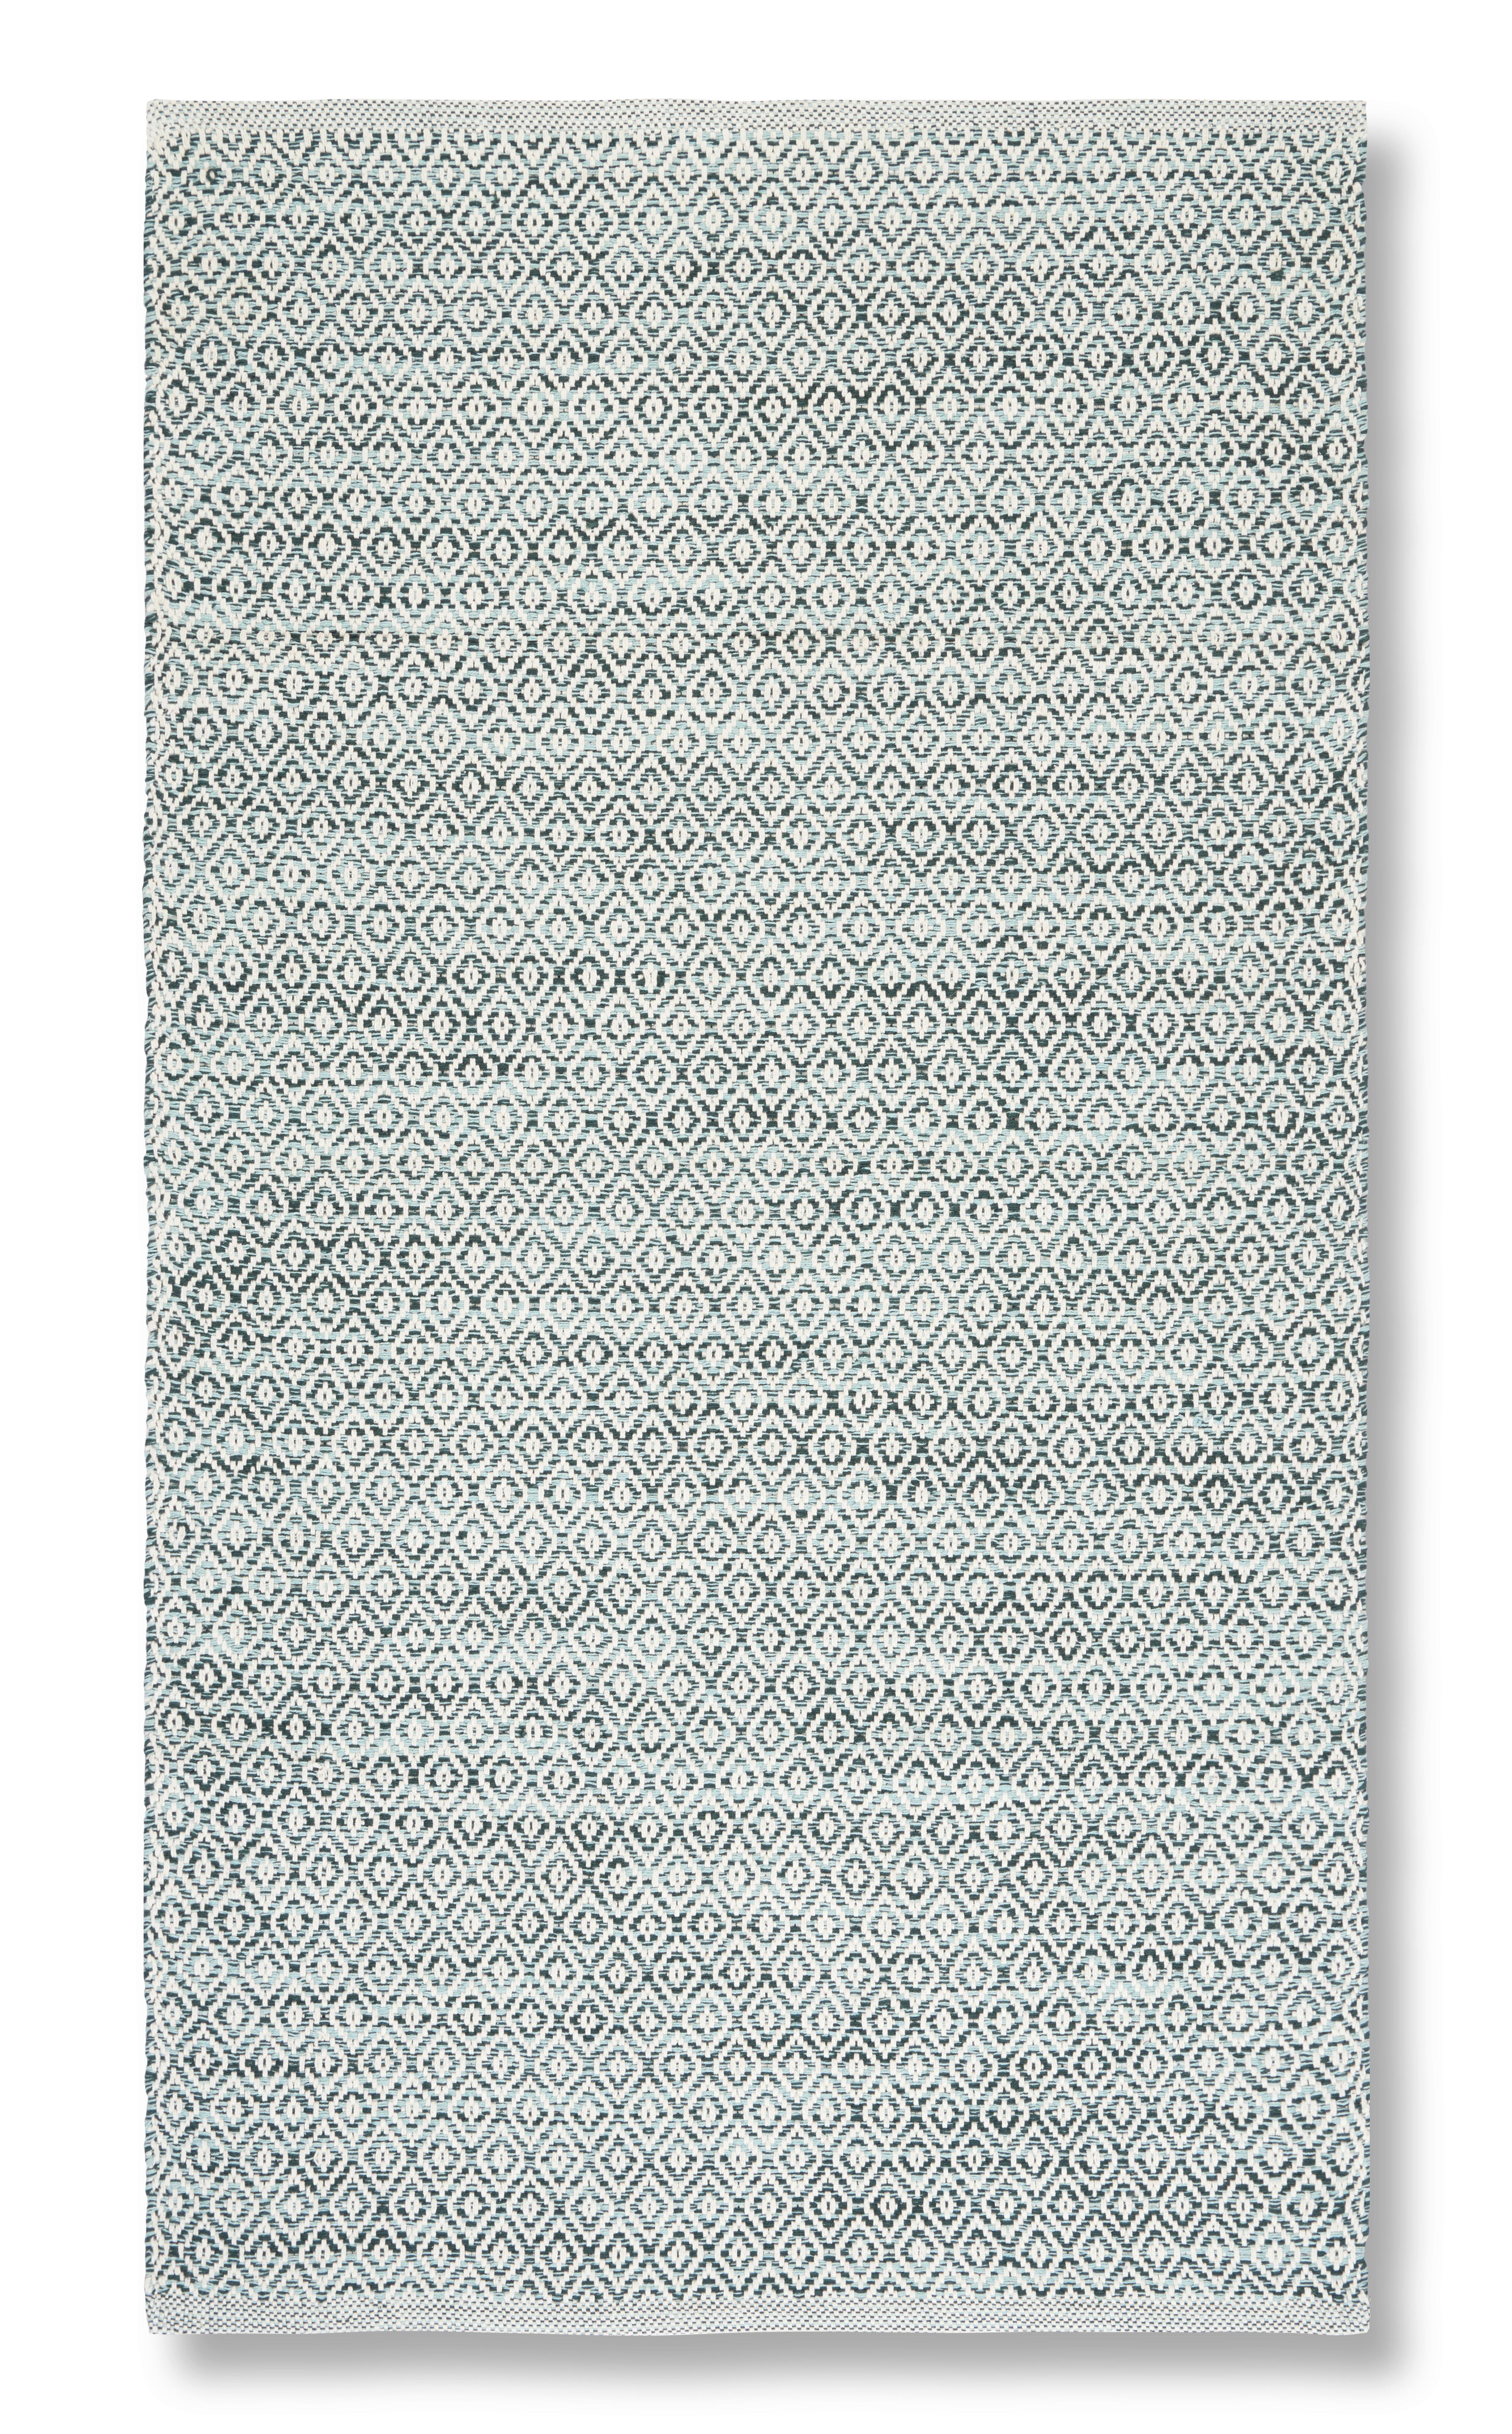 Ručne Tkaný Koberec Carola 1, 60/120cm, Zelená - zelená, Basics, textil (60/120cm) - Modern Living